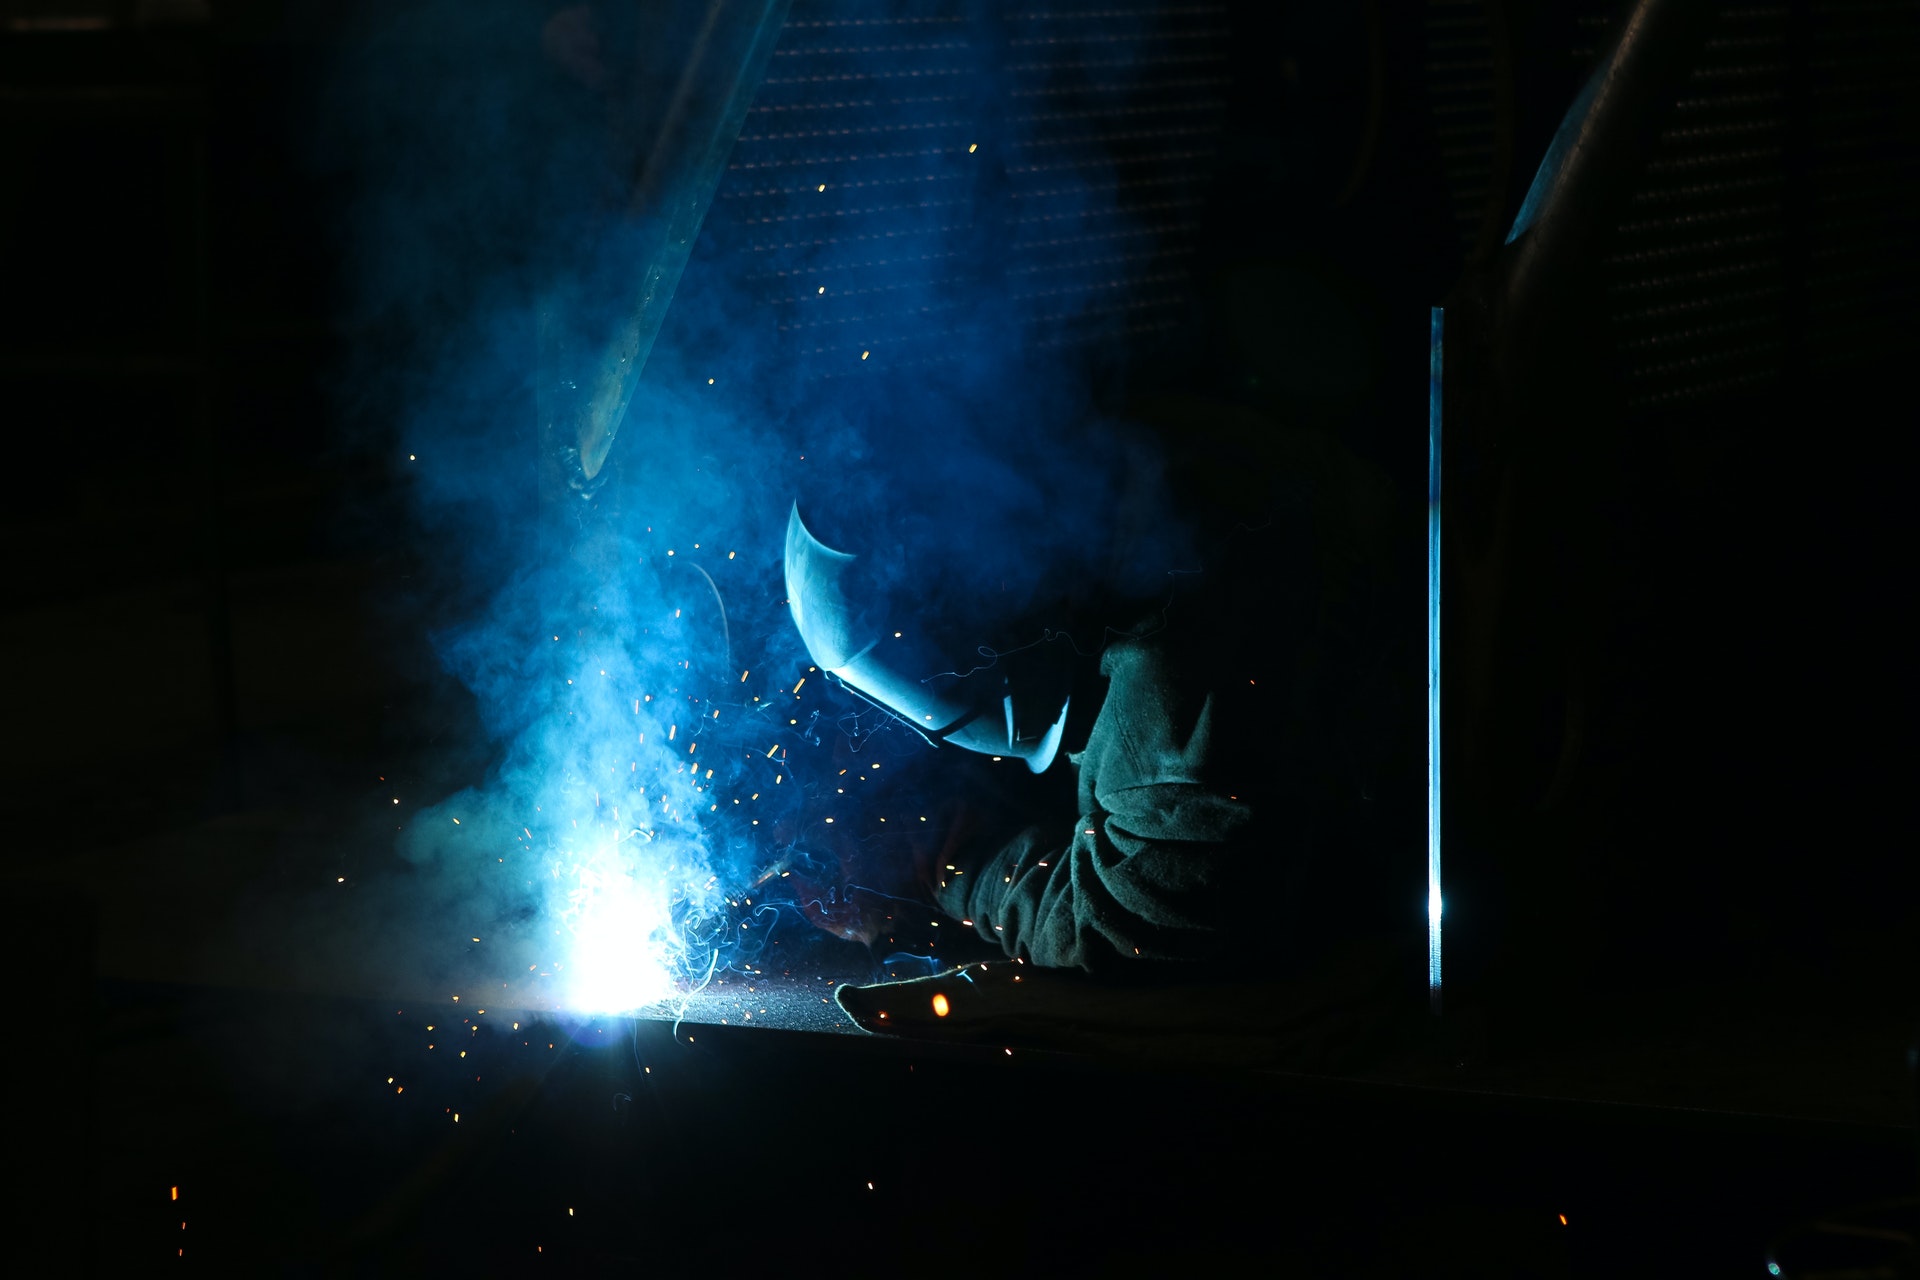 Welder creating blue sparks in a dark workroom.